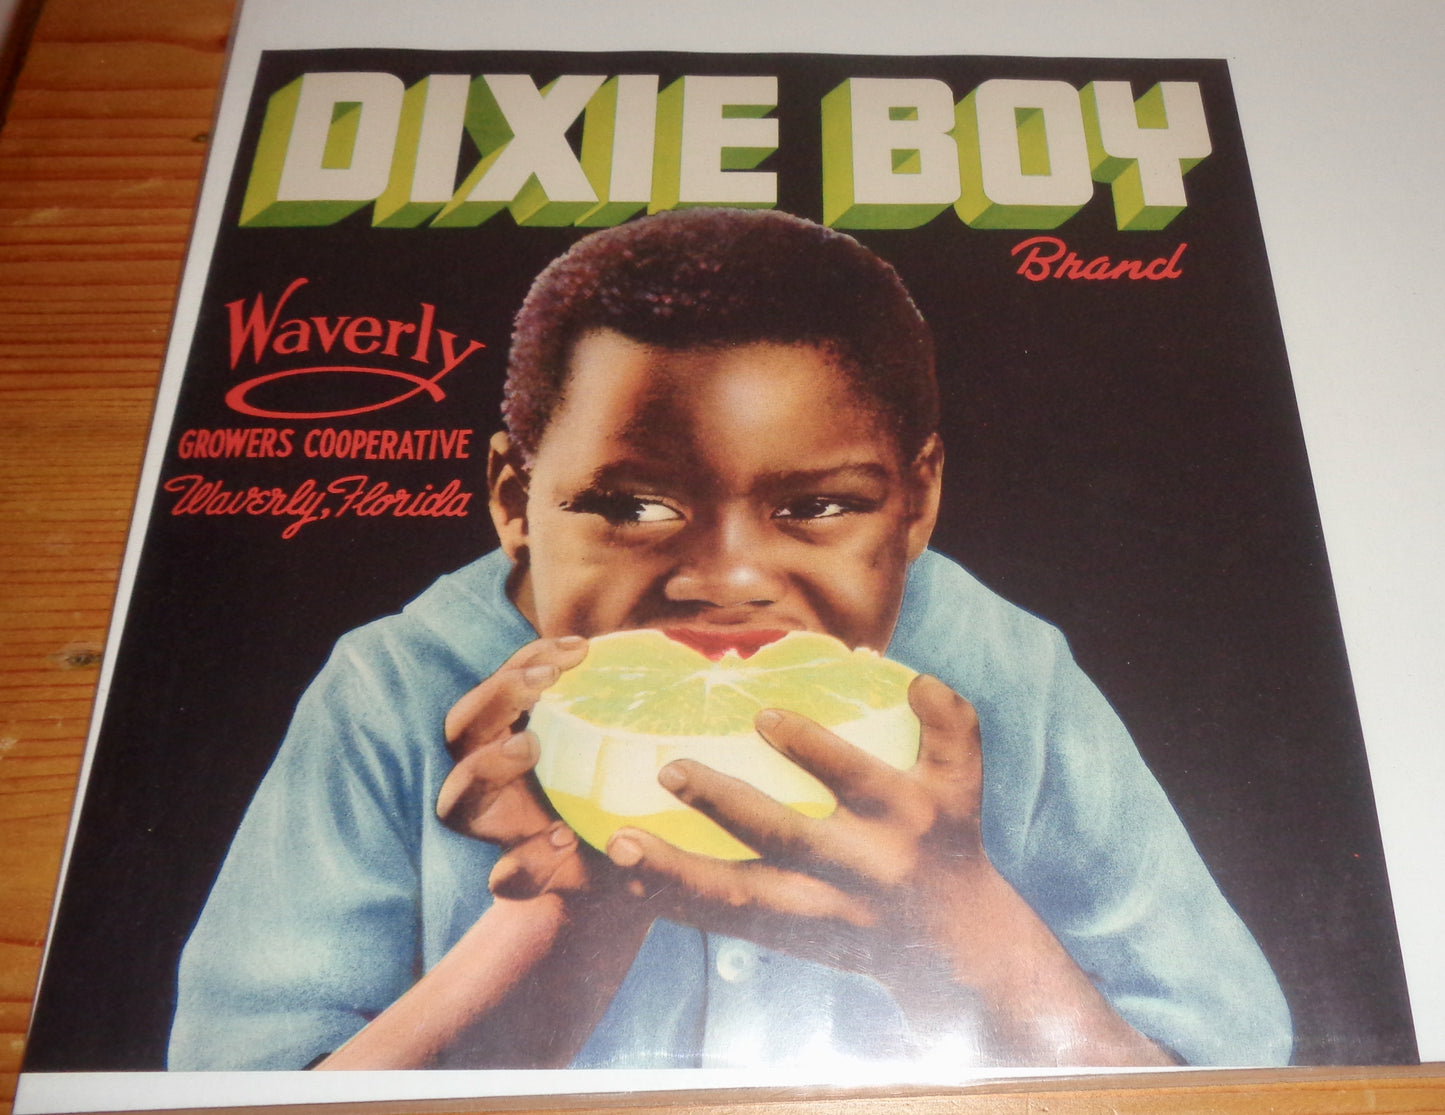 Vintage Original Fruit Crate Label For Dixie Boy Waverly Brand